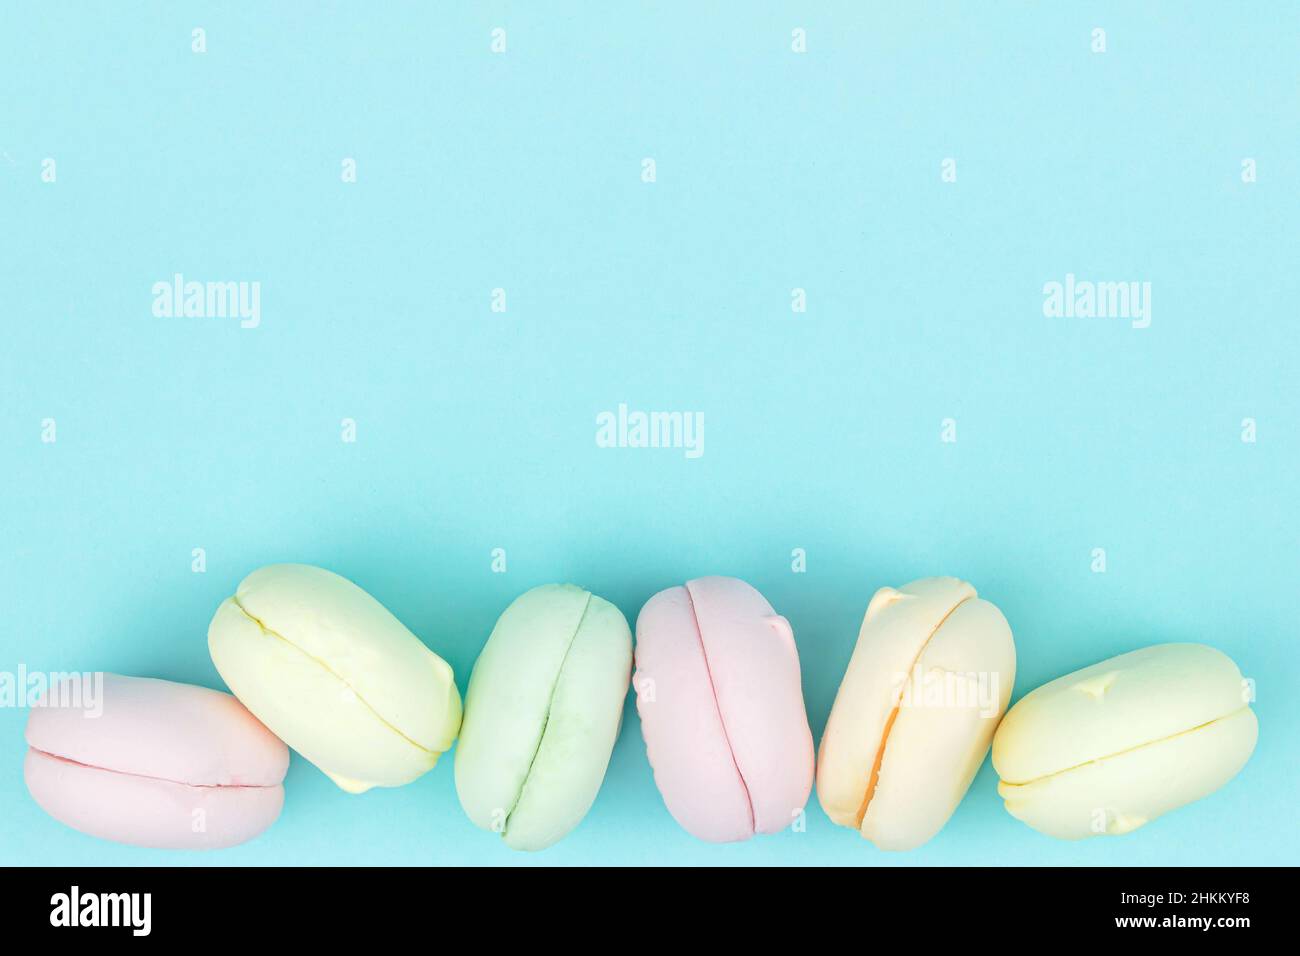 La marshmallow dolce e colorata assomiglia ai macaroon francesi Foto Stock